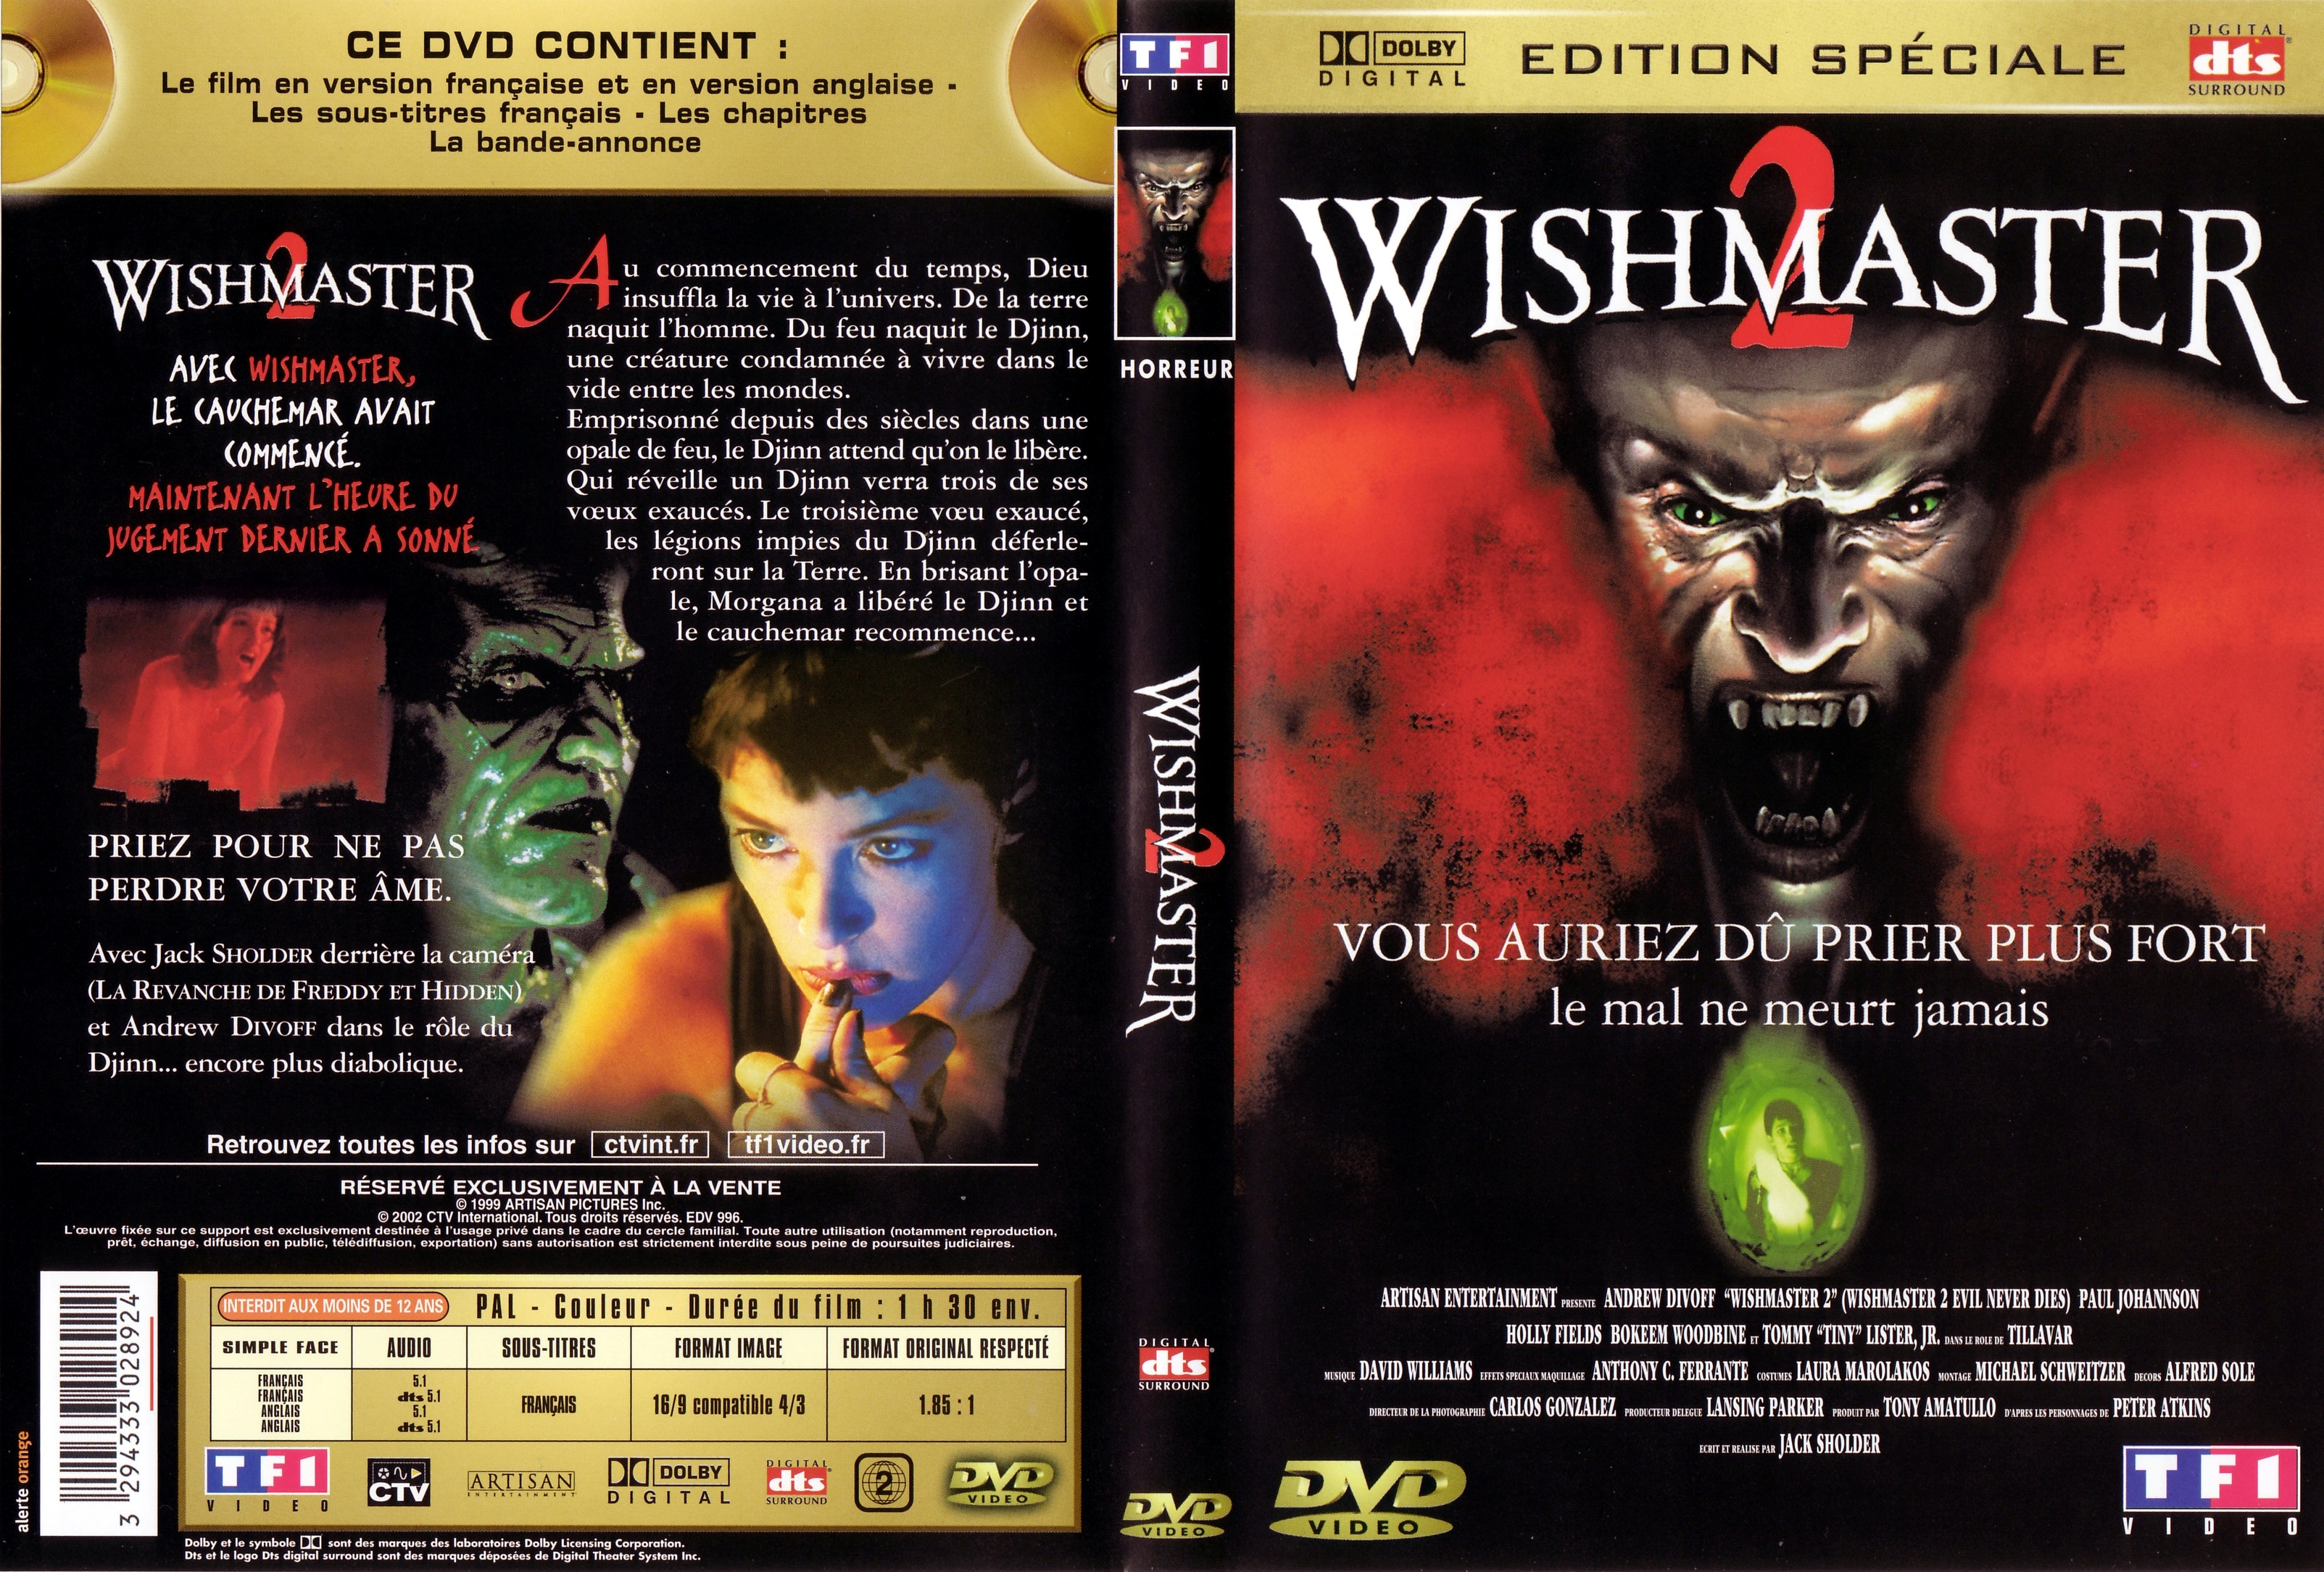 Jaquette DVD Wishmaster 2 v2